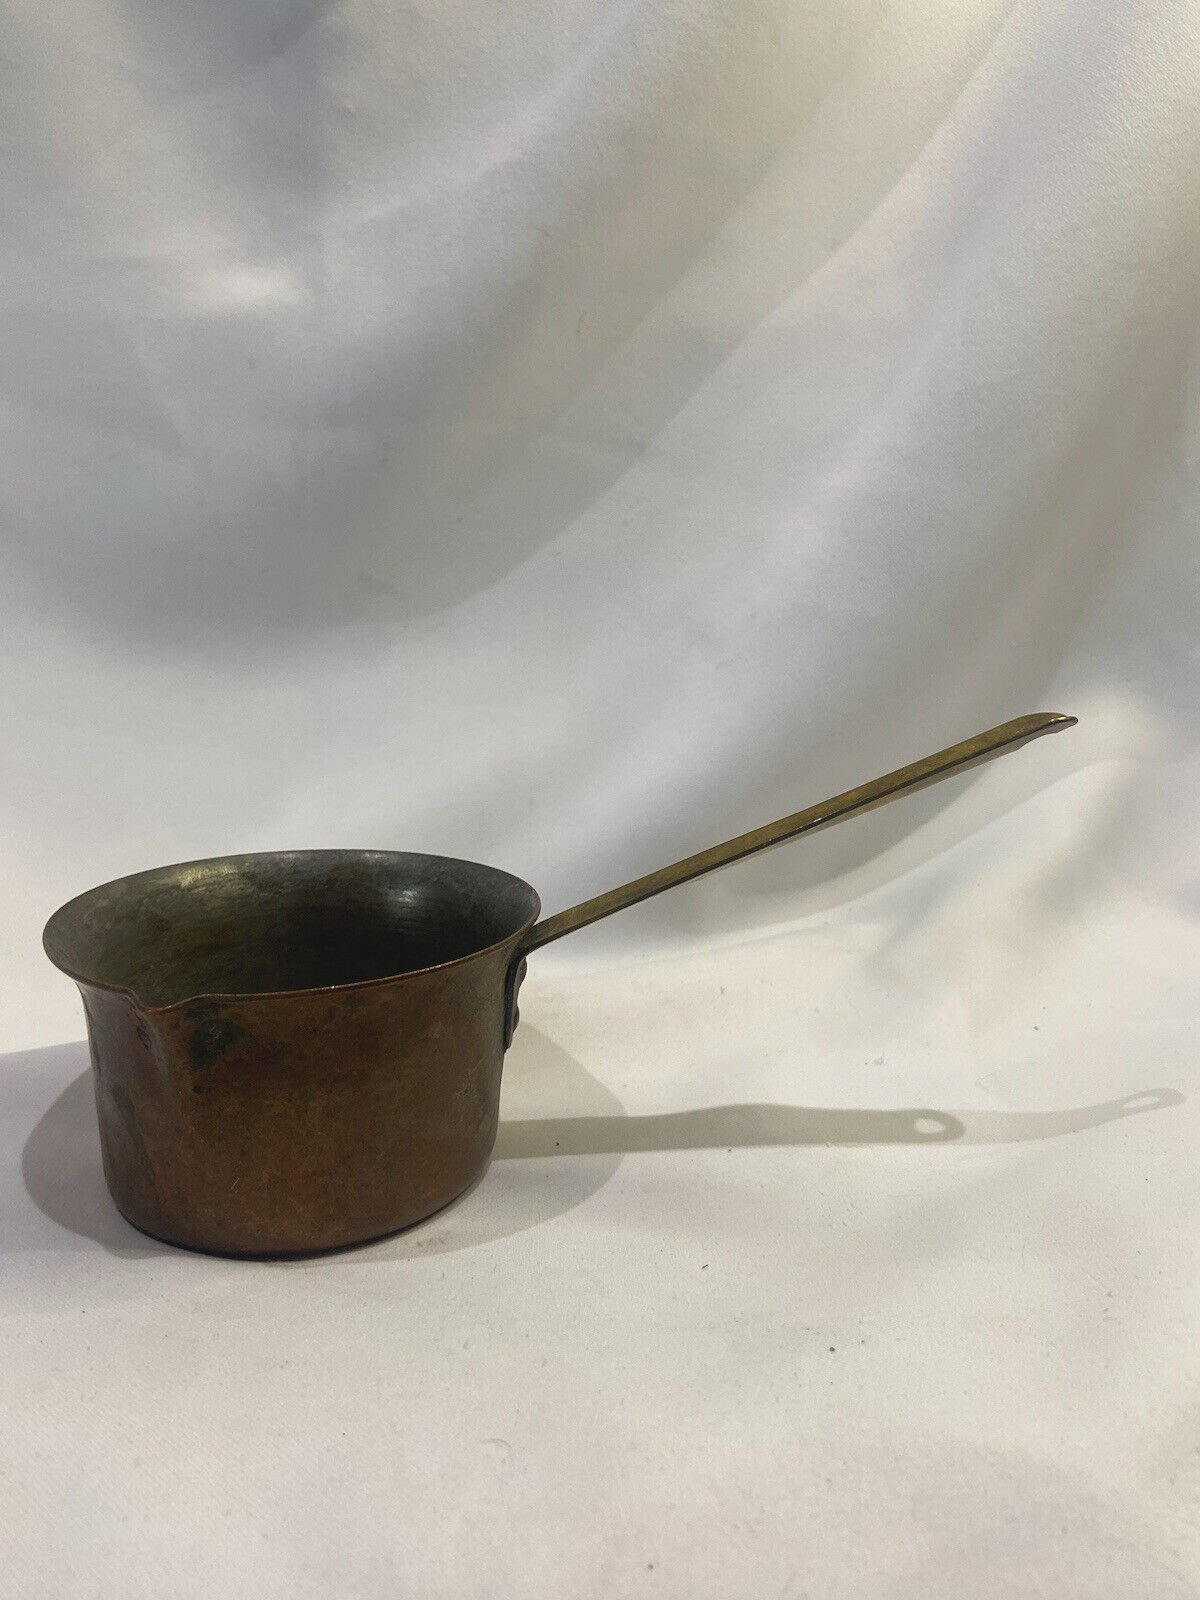 Vintage COPPER Ladle Bowl Brass Handle Rustic Primitive Dipper Scoop Camping